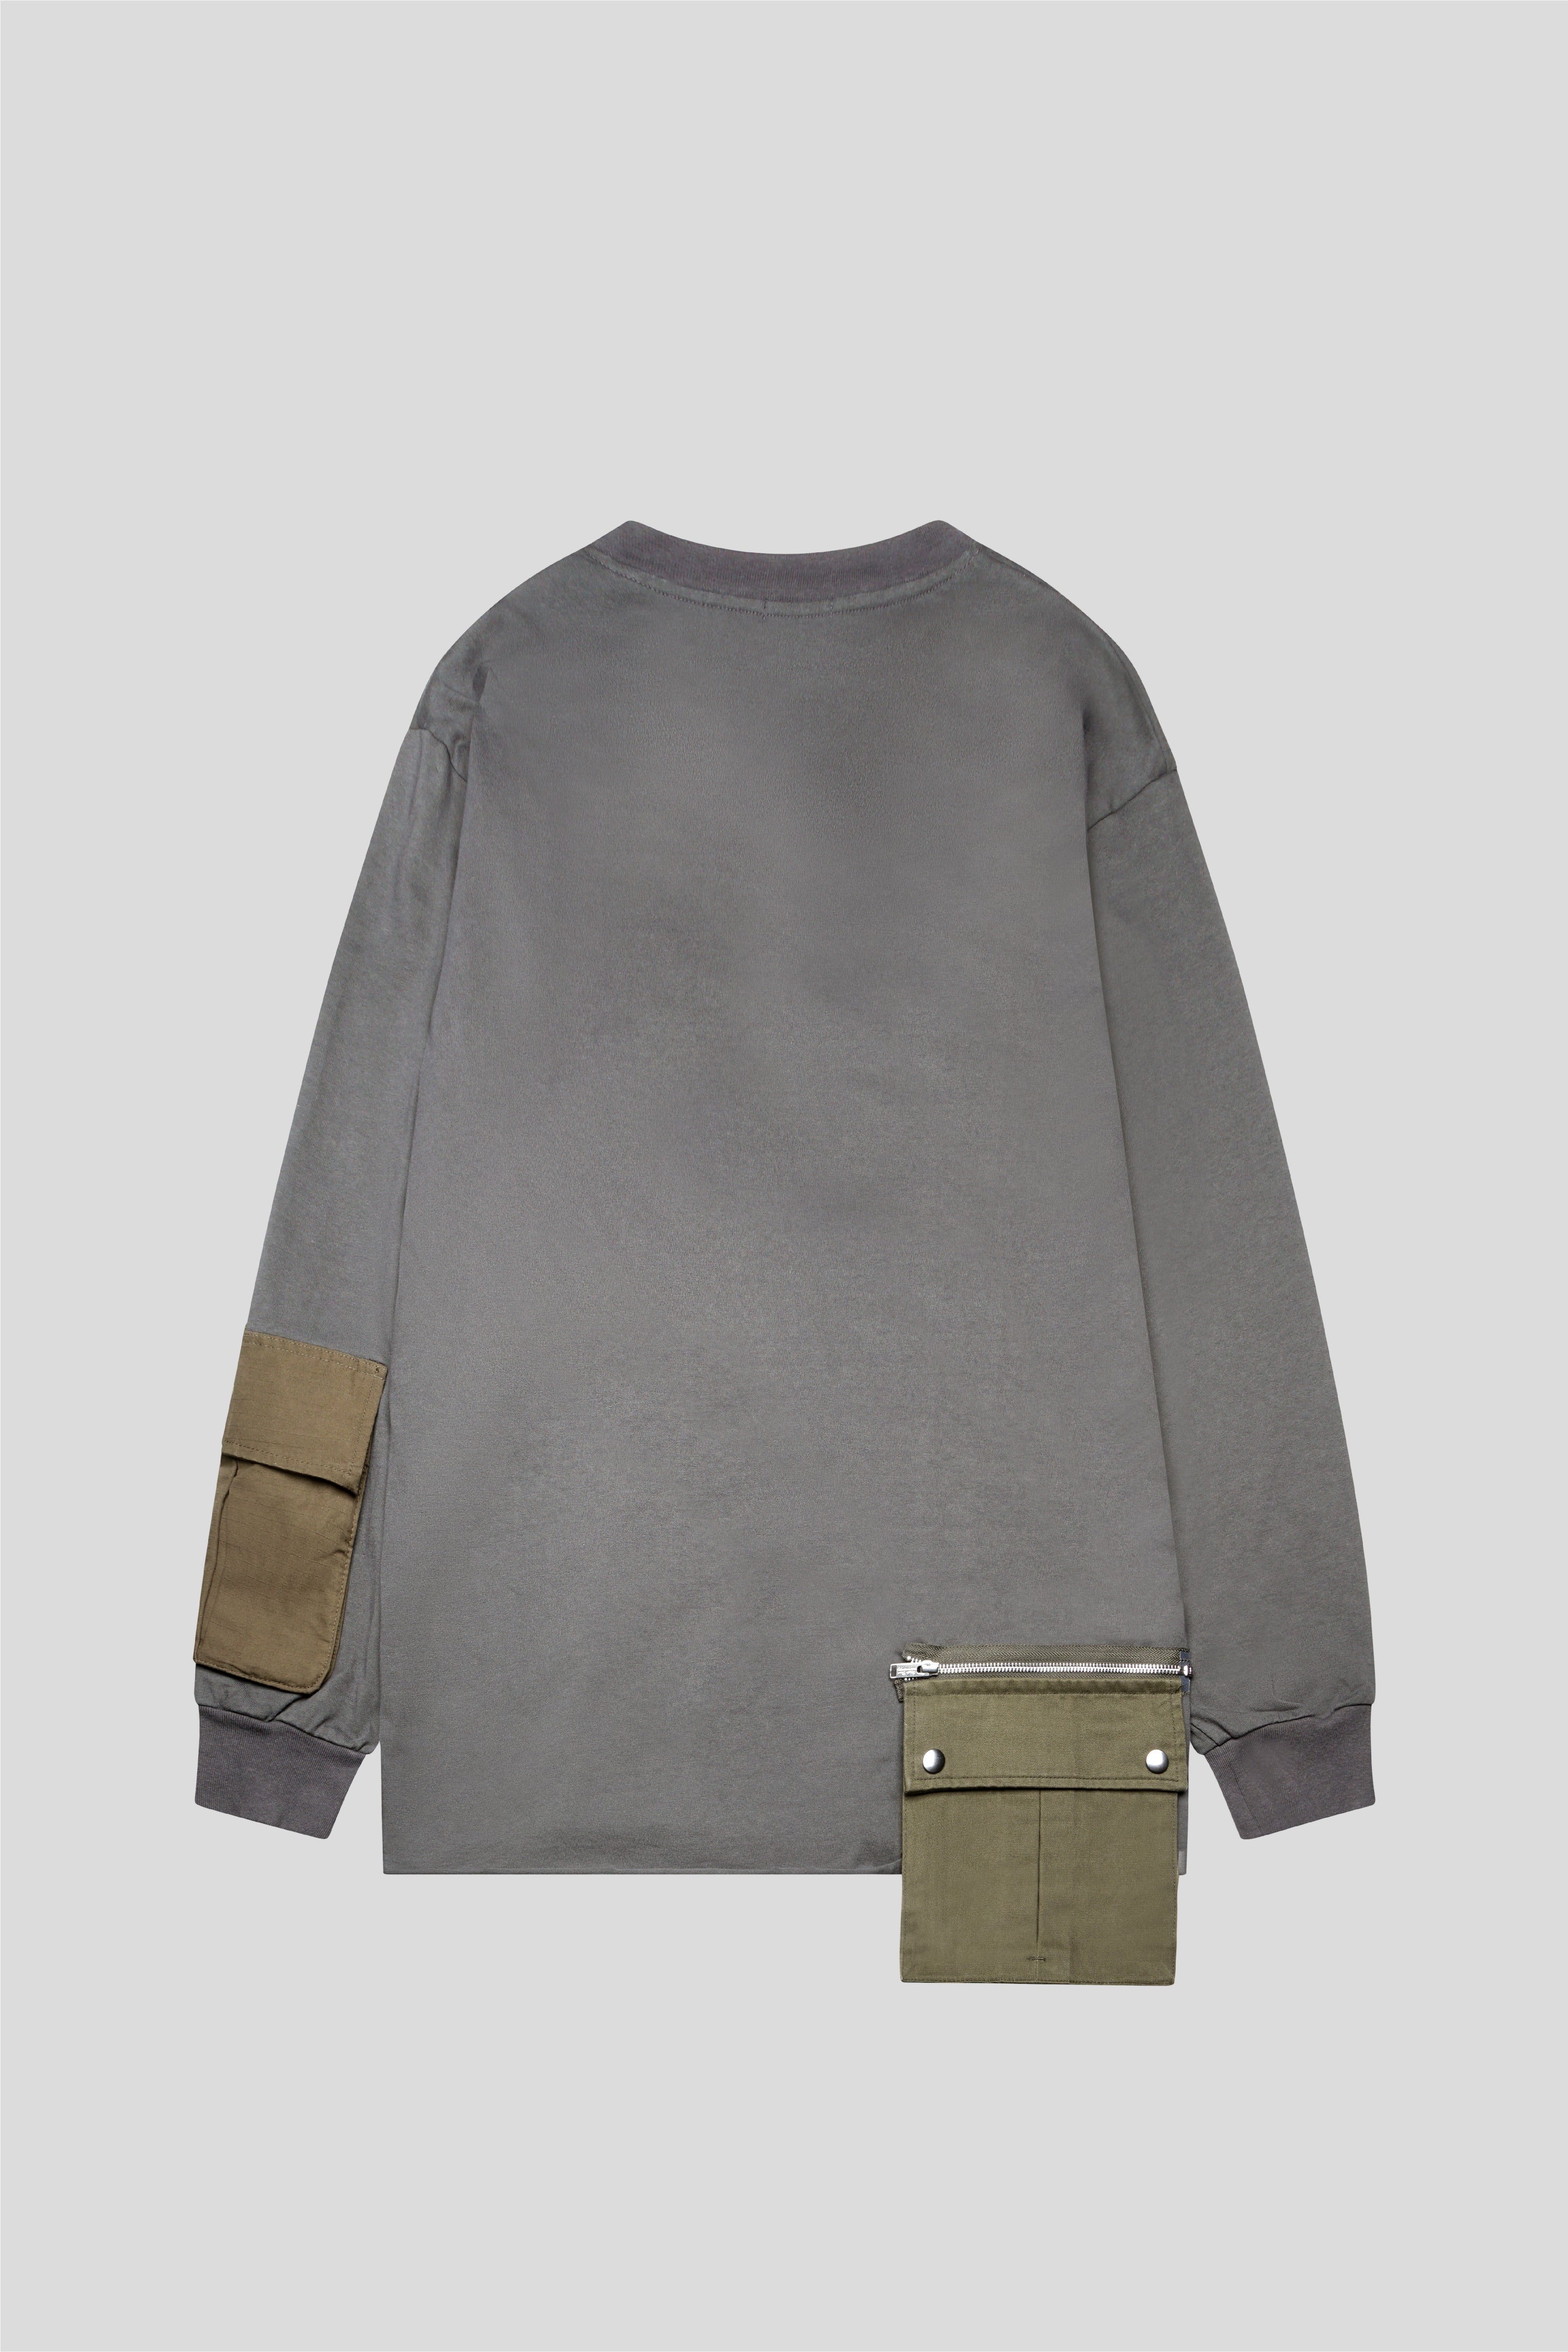 Selectshop FRAME - UNDERCOVERISM Sweat Shirt Sweats-Knits Concept Store Dubai